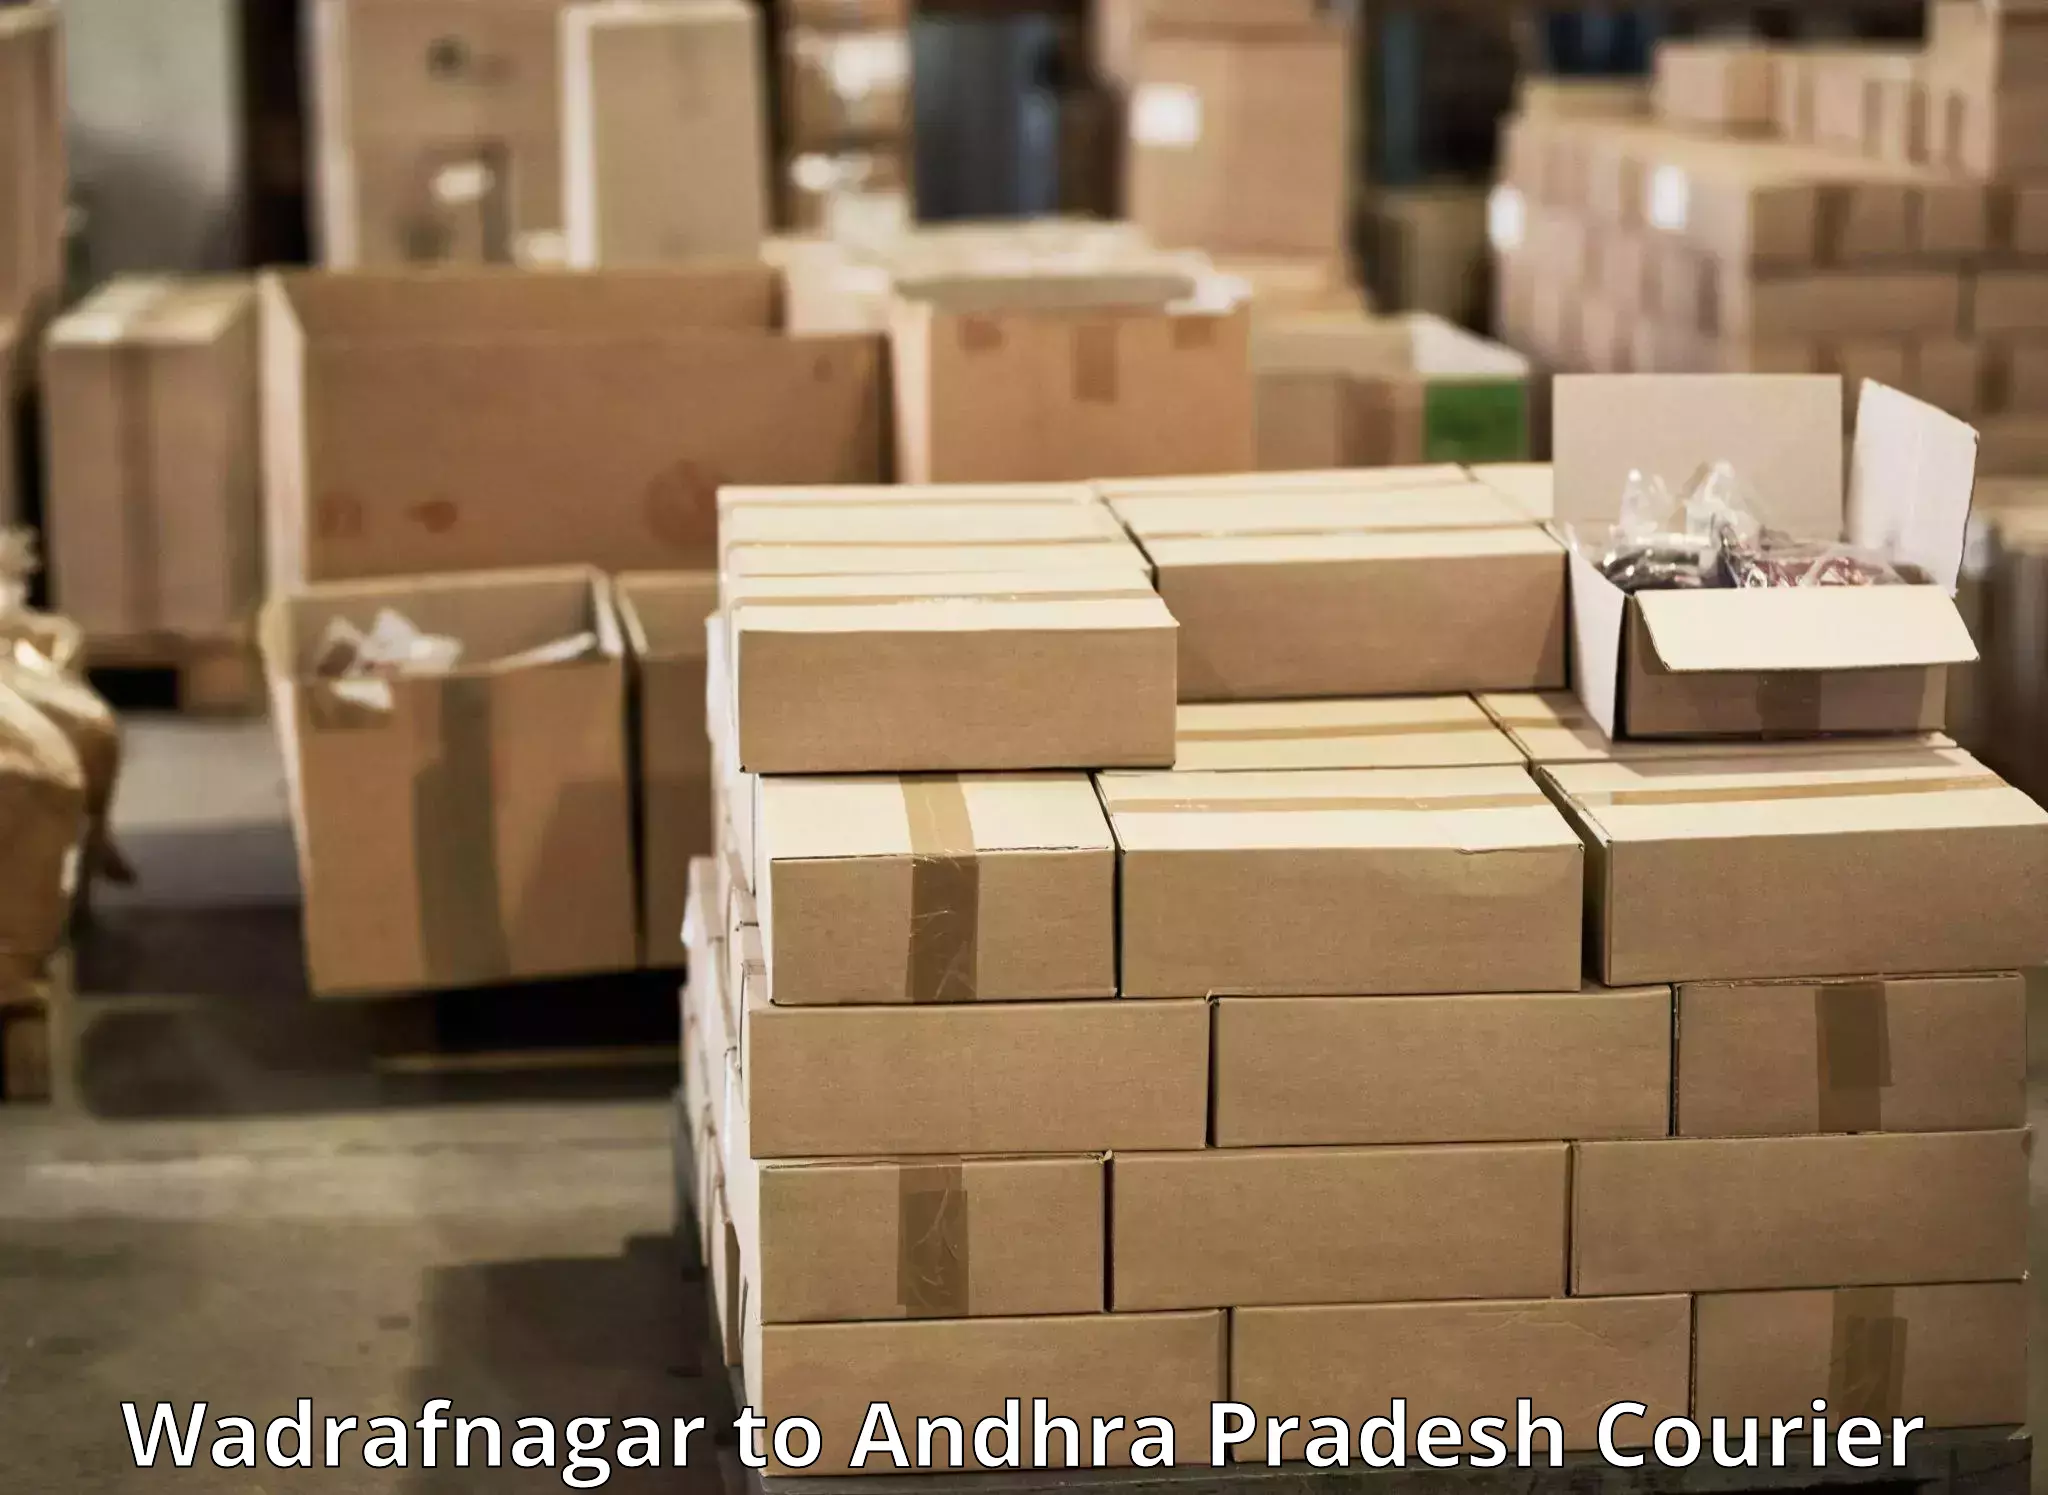 Secure packaging in Wadrafnagar to Pulivendula